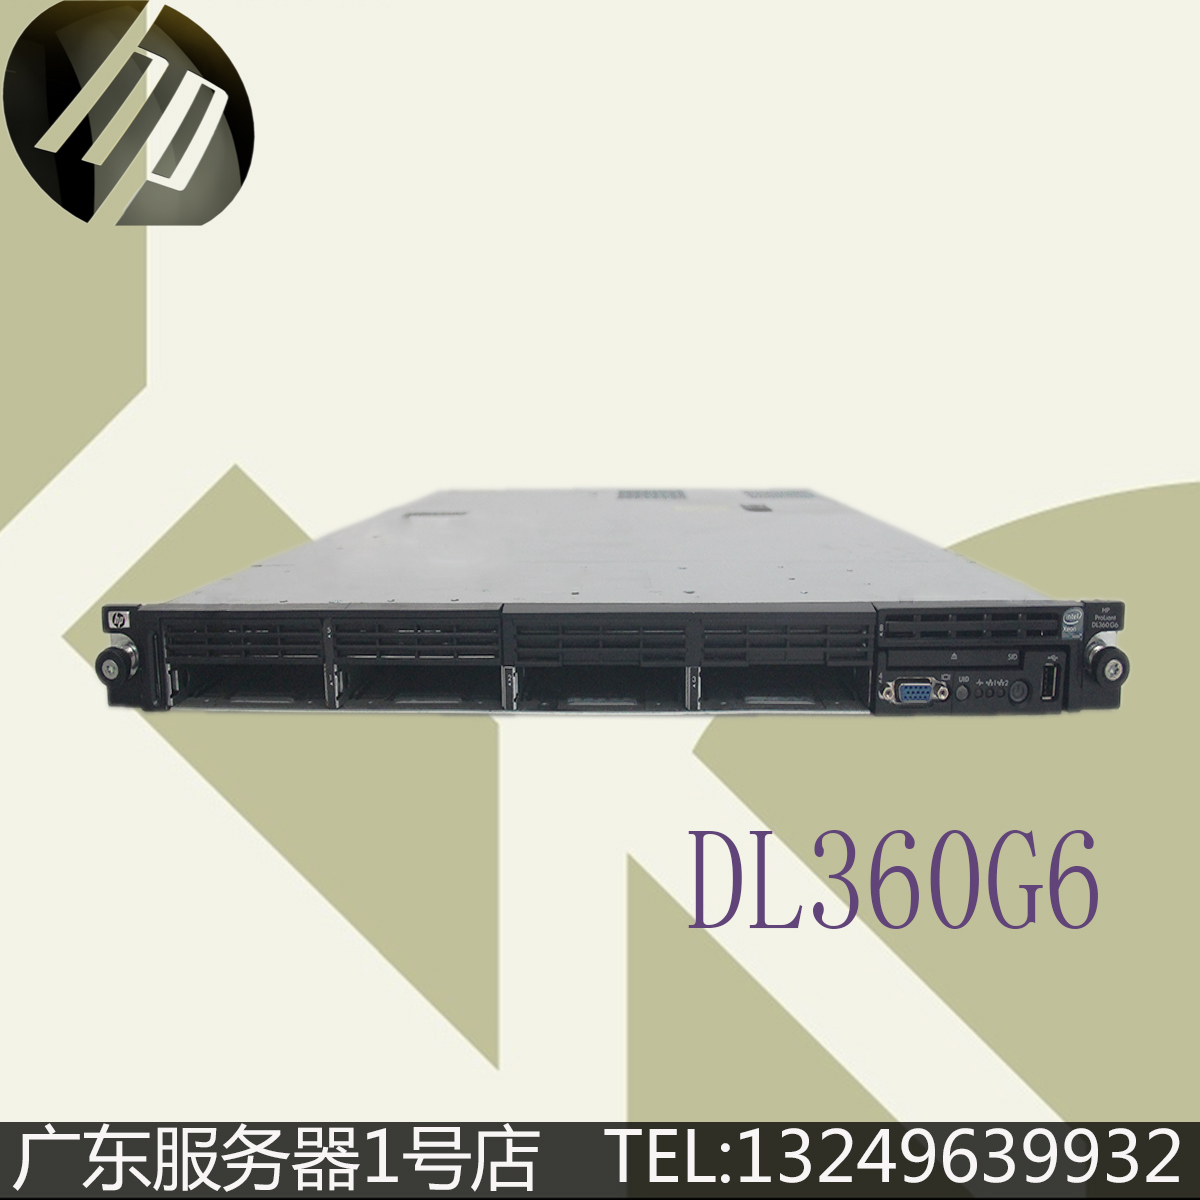 HP DL360 G6 1U静音服务器 虚拟 大内存 八盘位 支持独显 秒R610